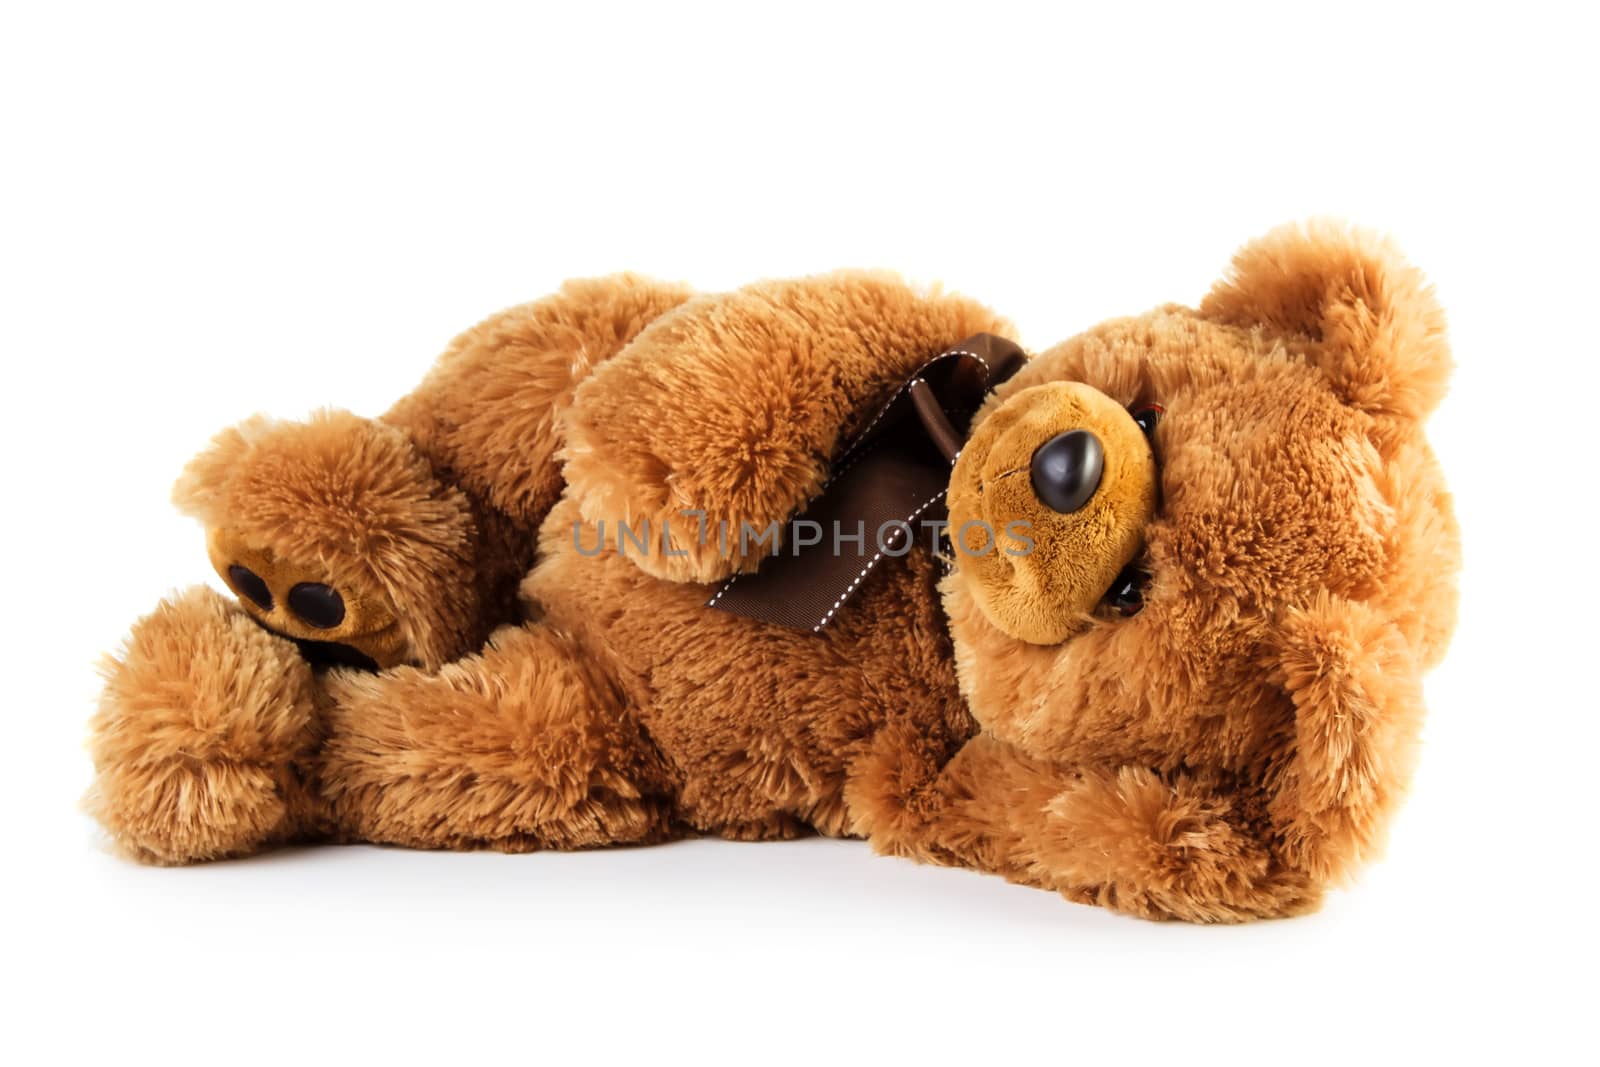 Toy teddy bear lying isolated on white background